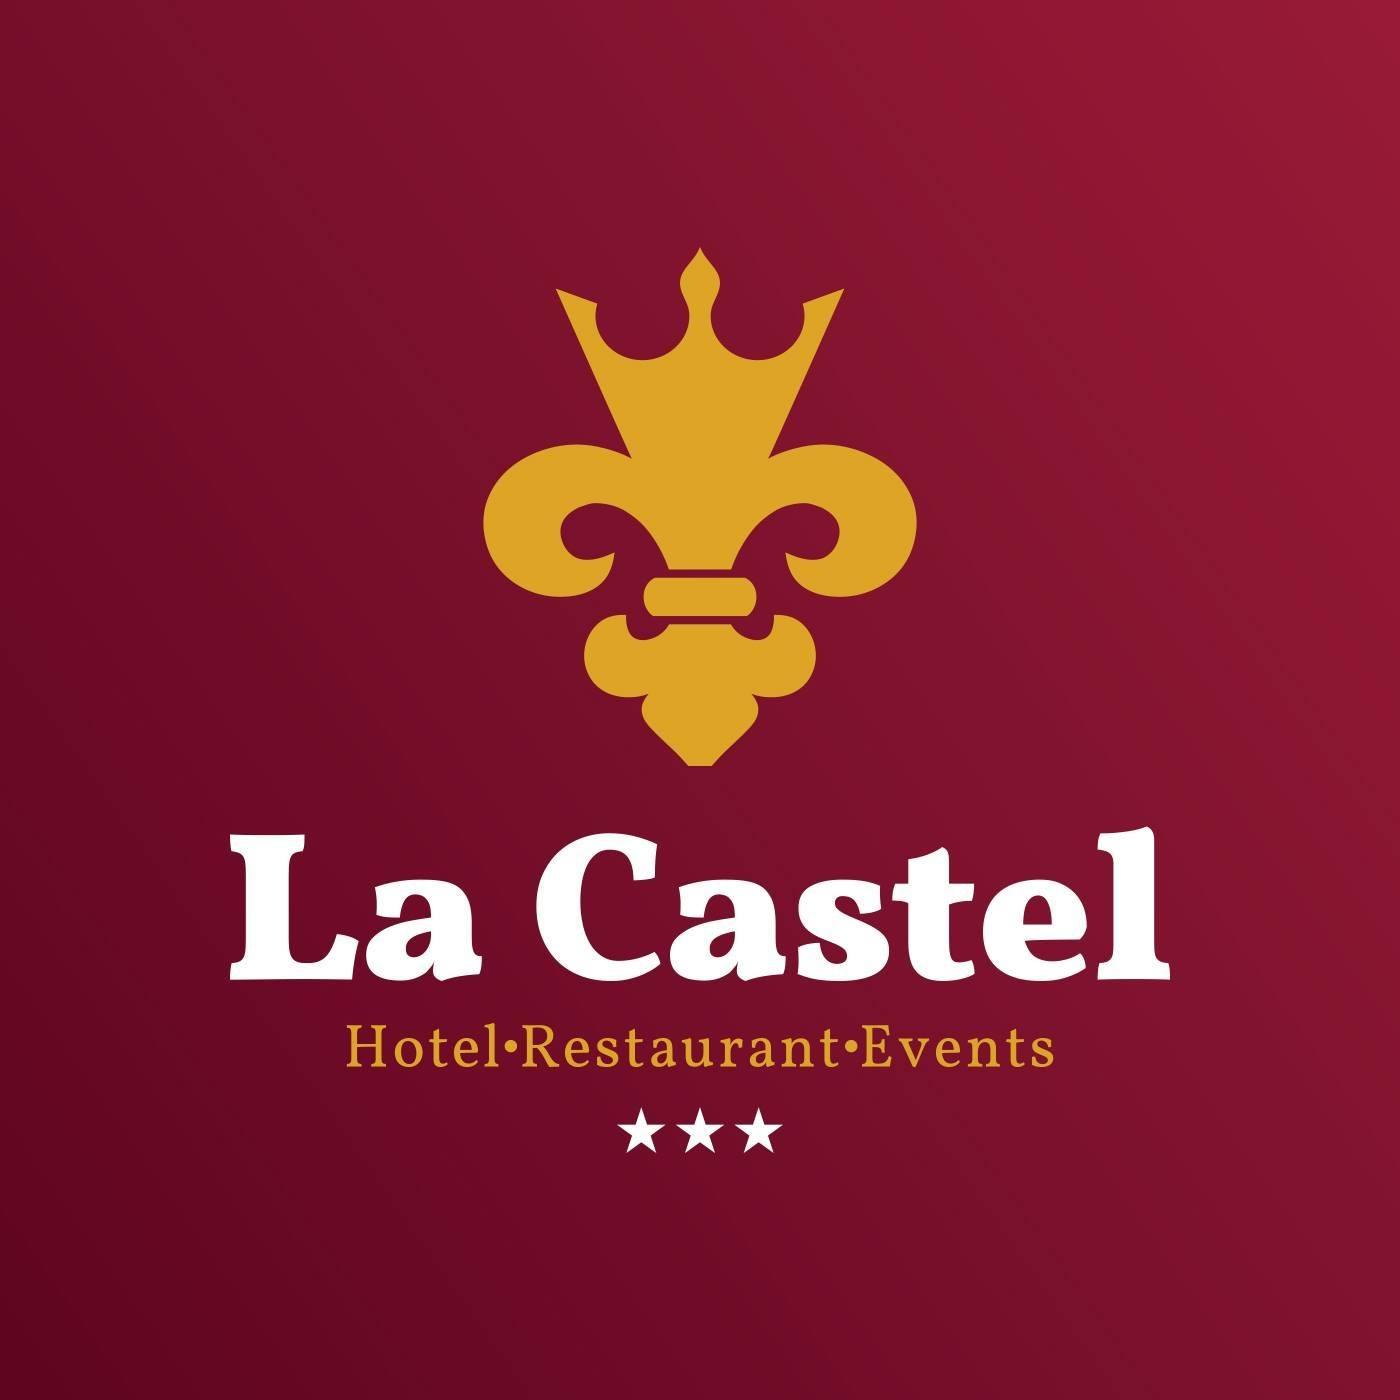 La Castel